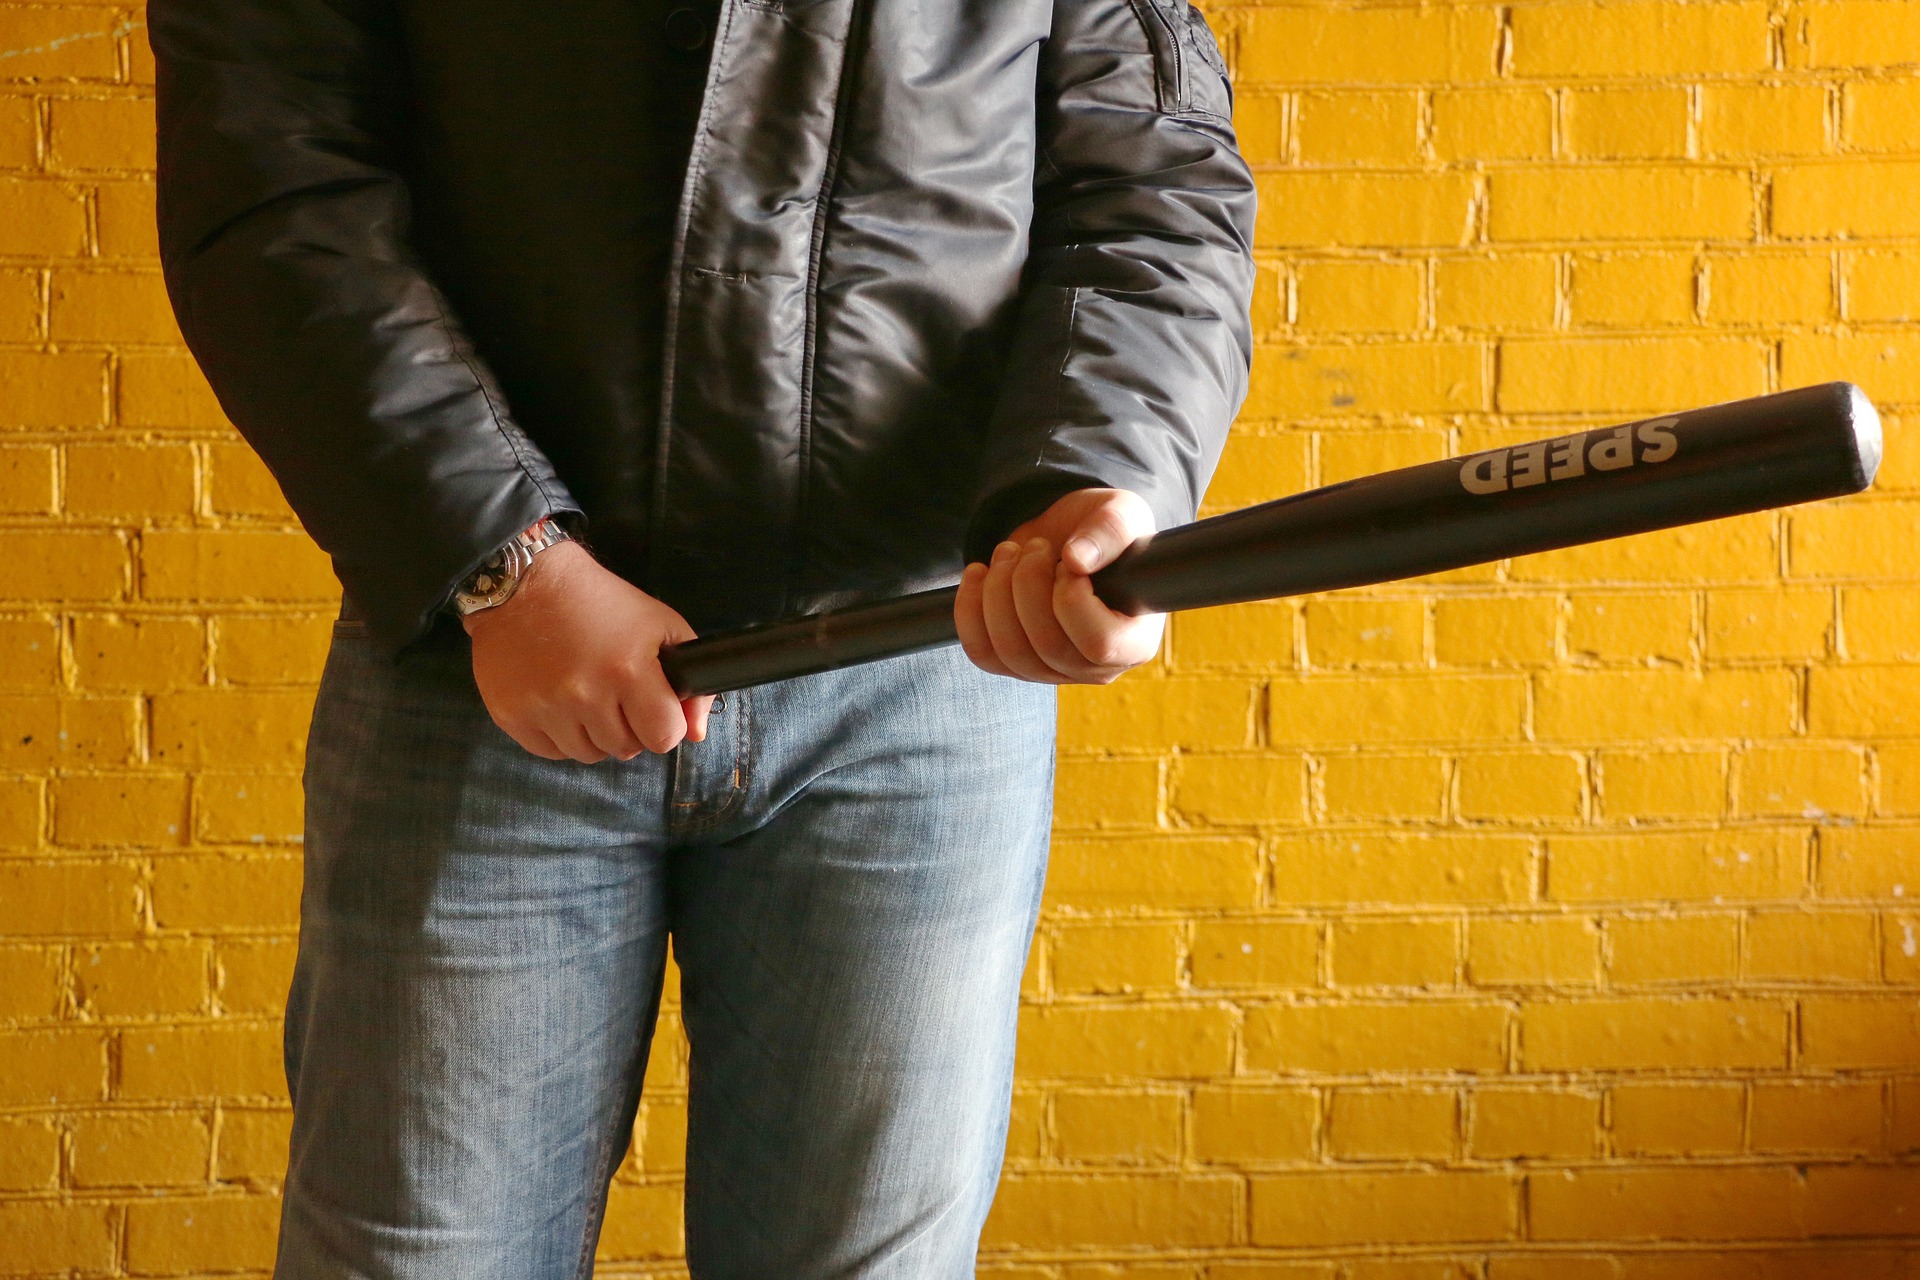 A mugger with a baseball bat